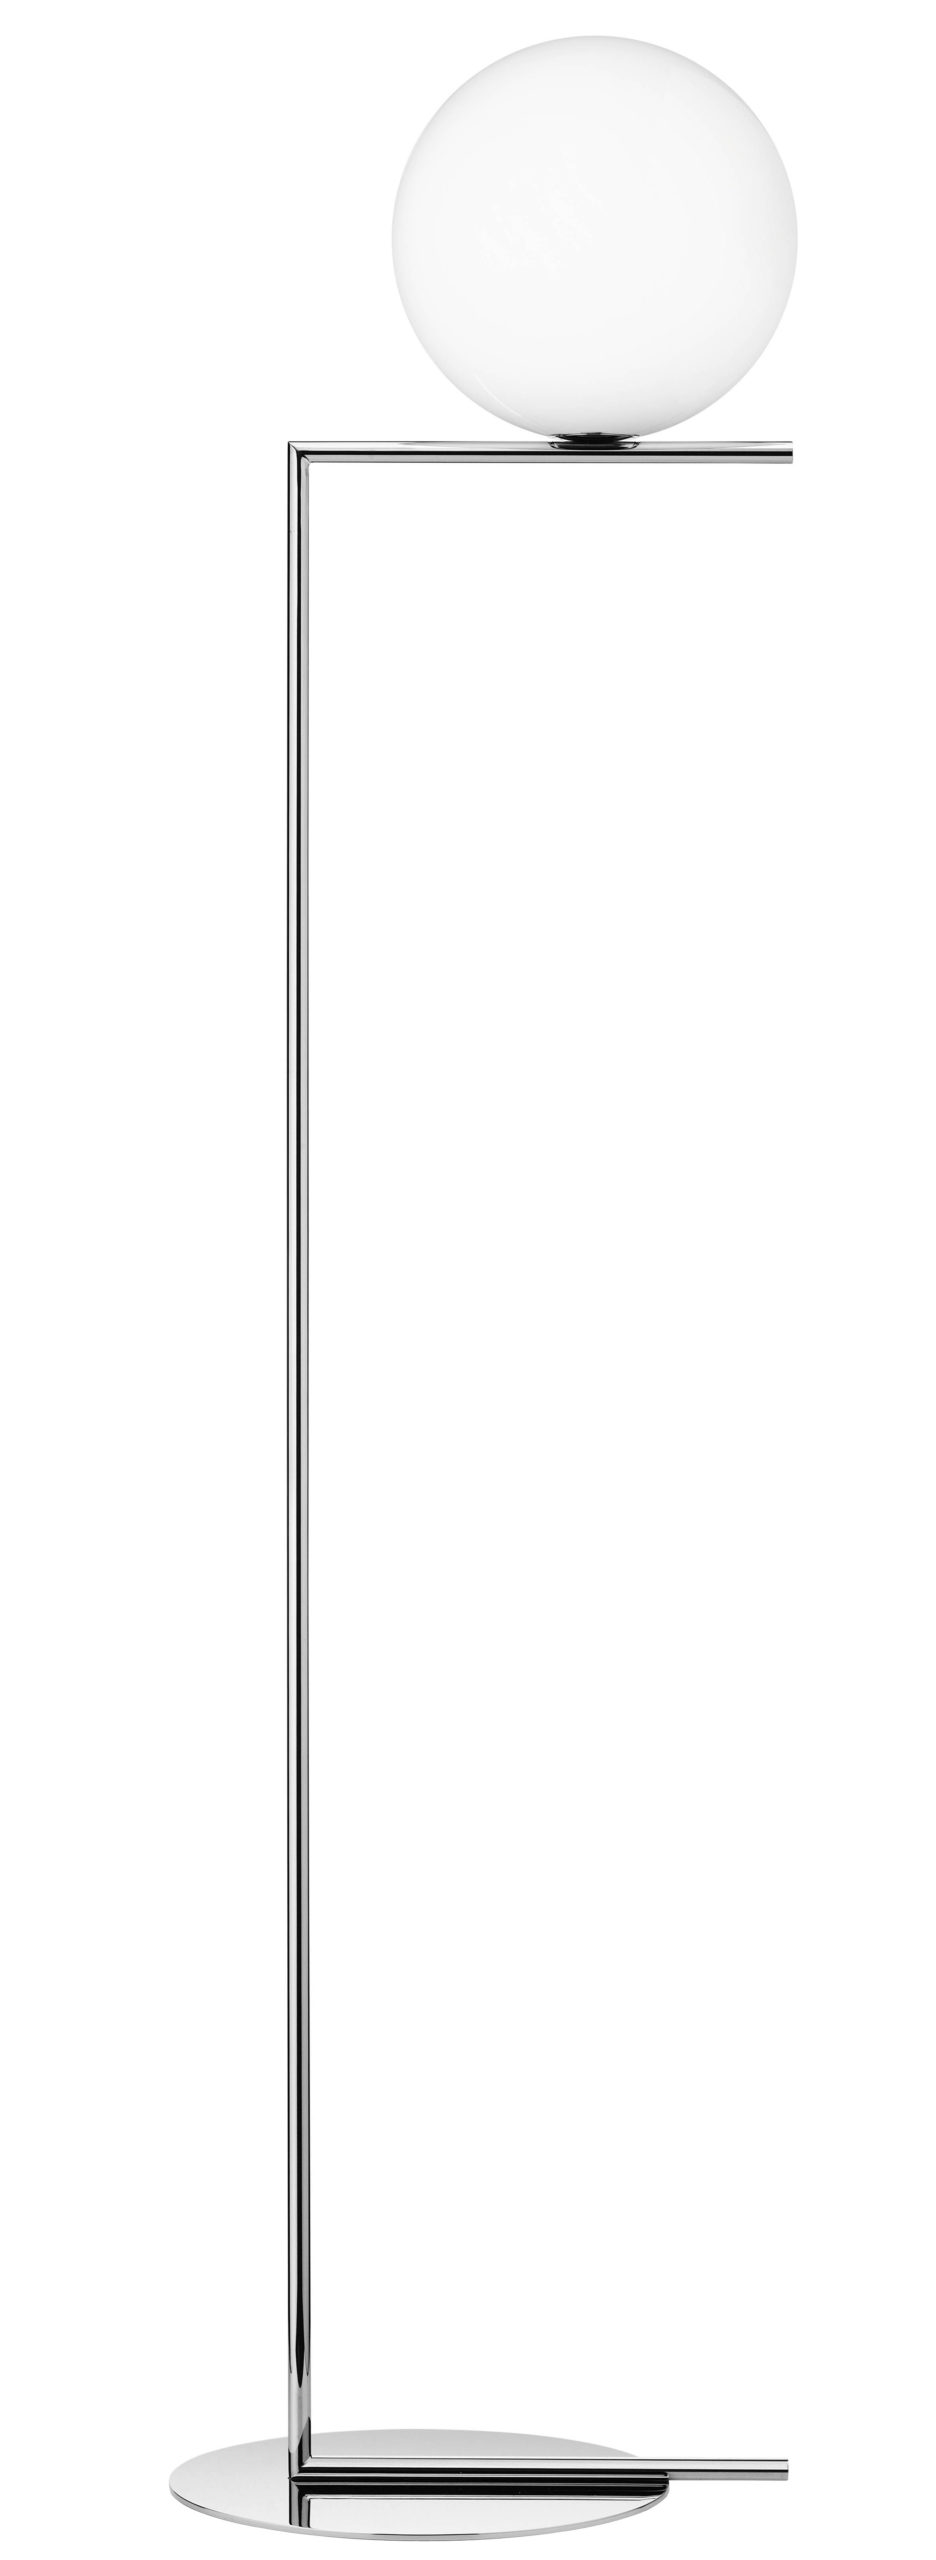 IC F2 Floor Lamp - H 185,2 cm Chrome Flos Michael Anastassiades